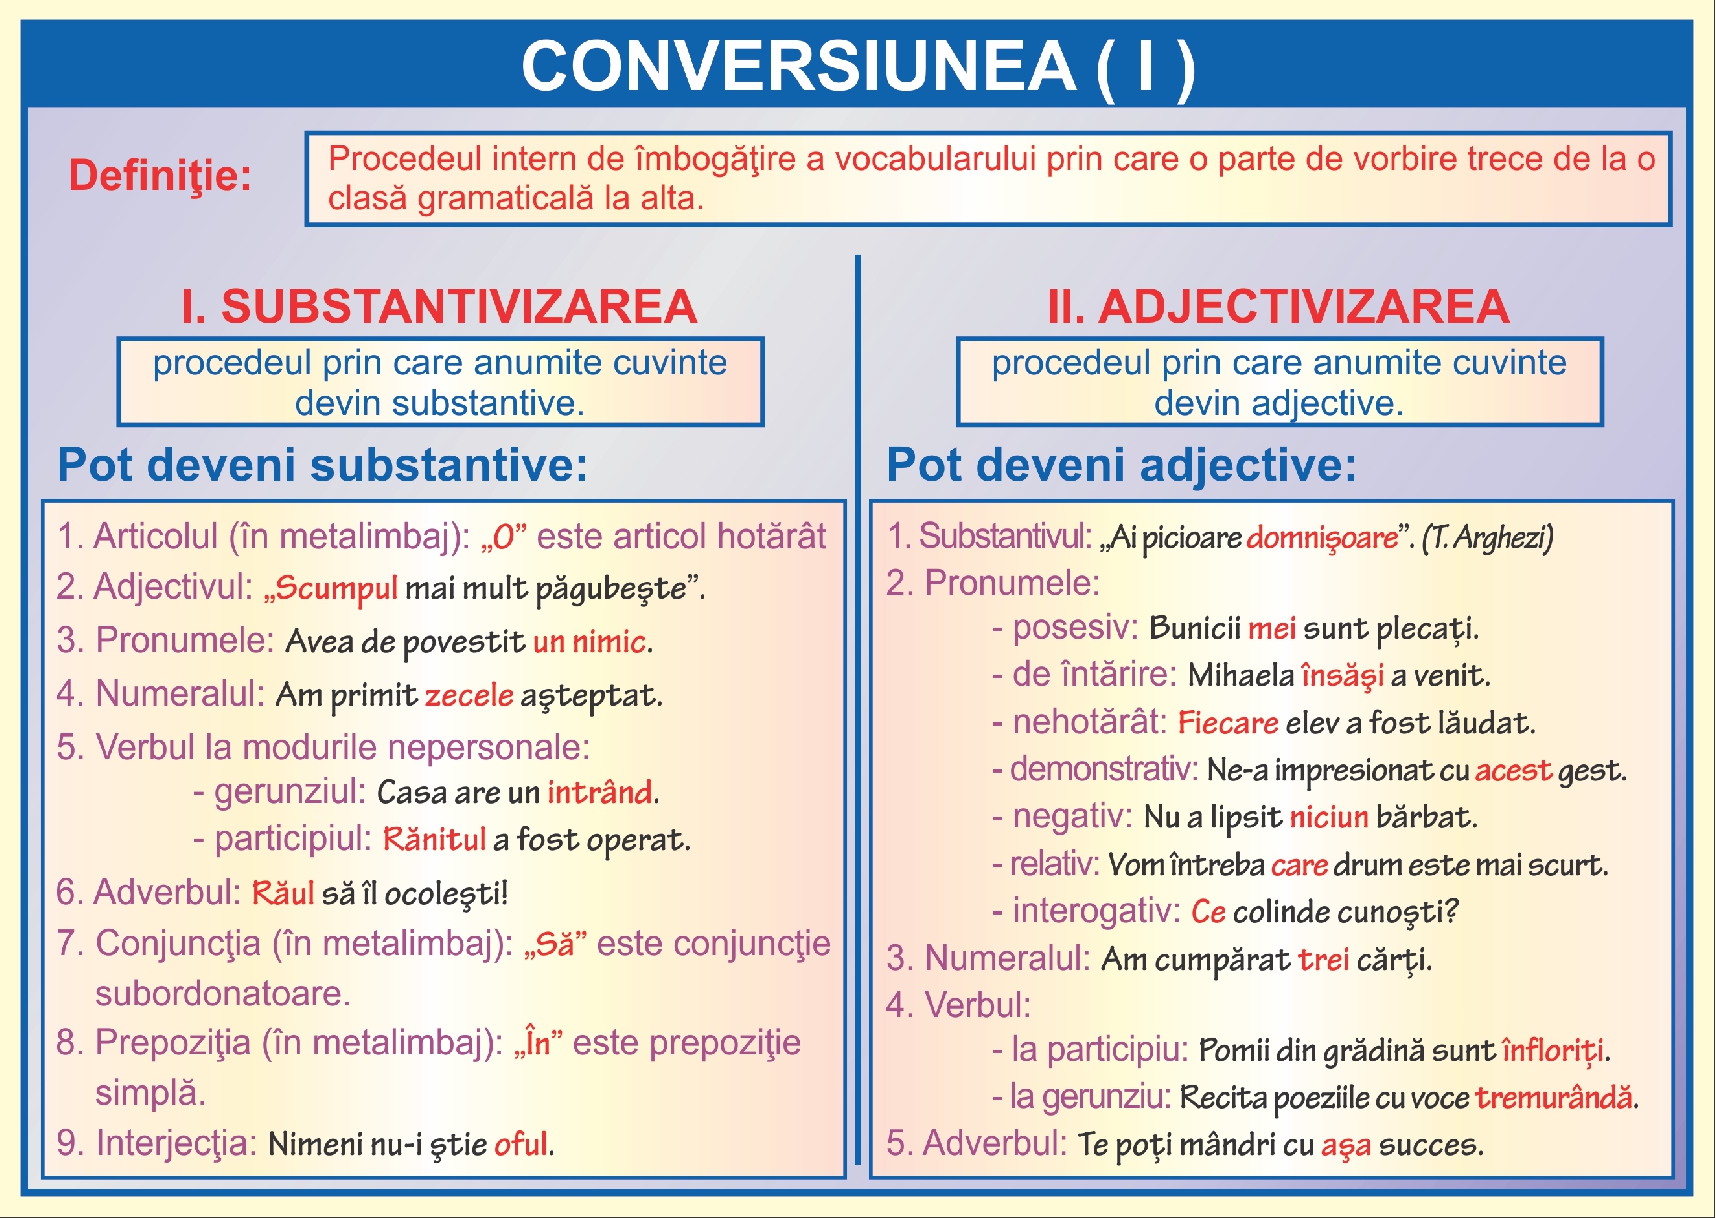 Conversiunea - I